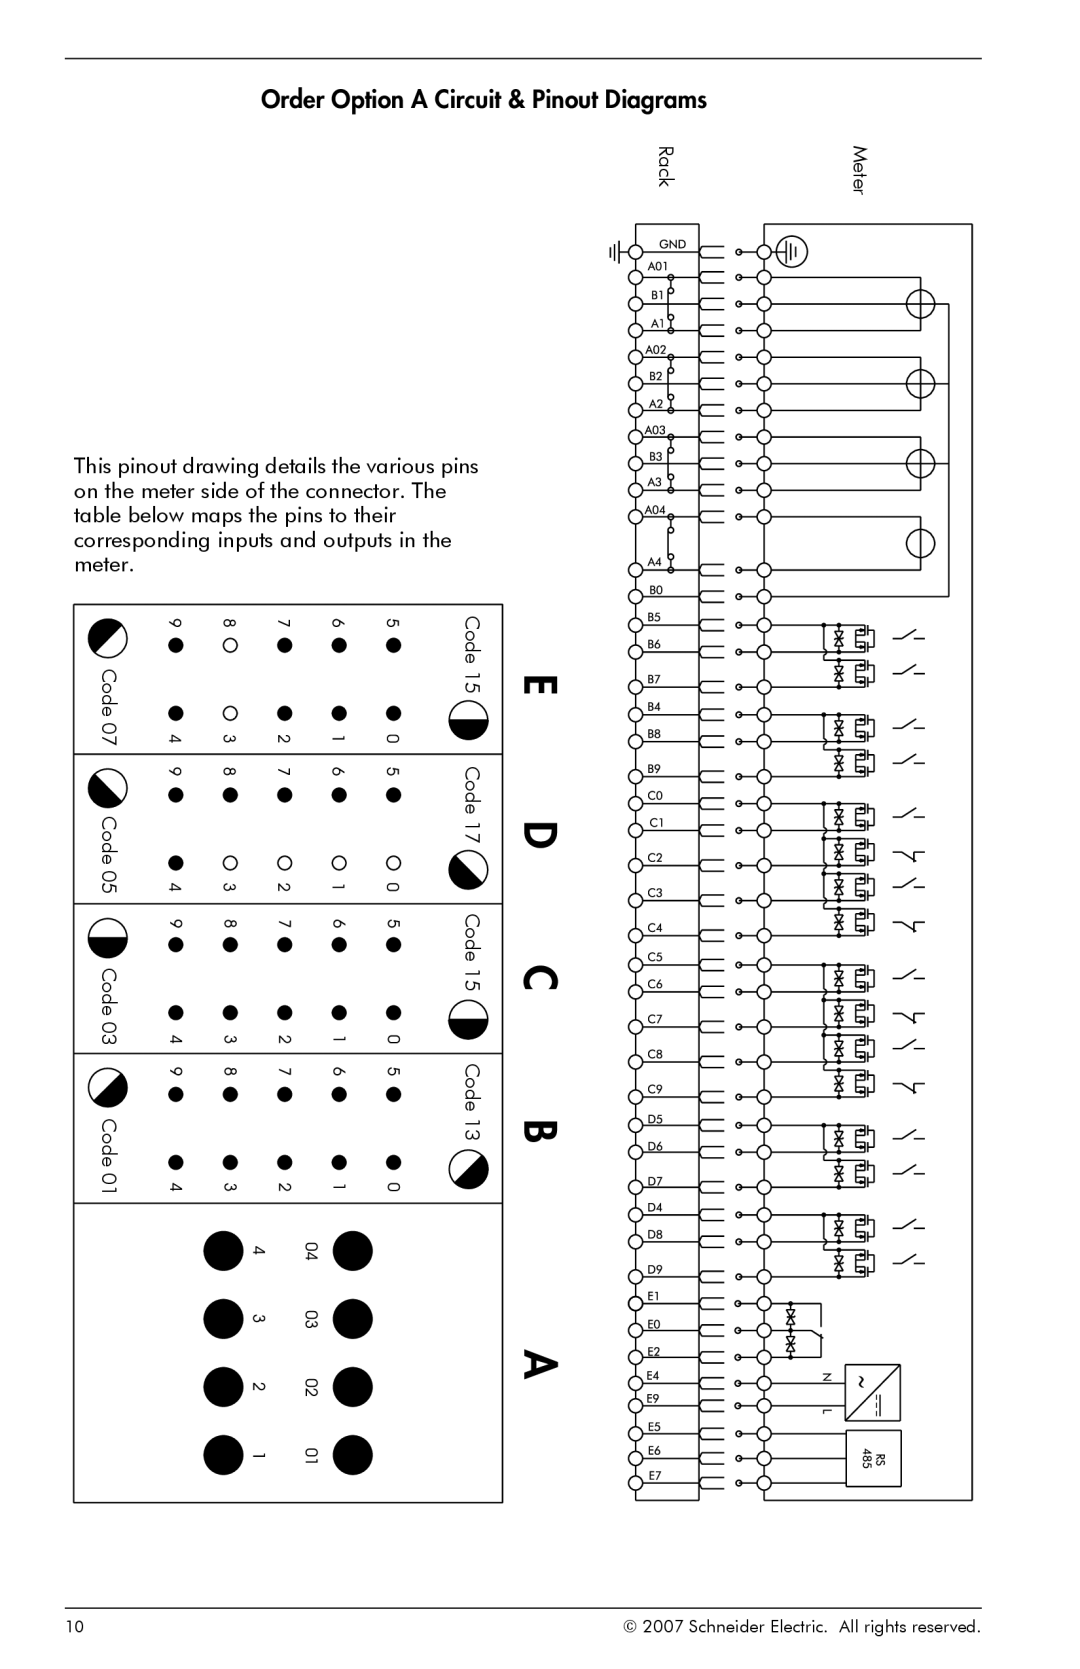 Schneider Electric ION8800 manual E D C B A, Order Option A Circuit & Pinout Diagrams 